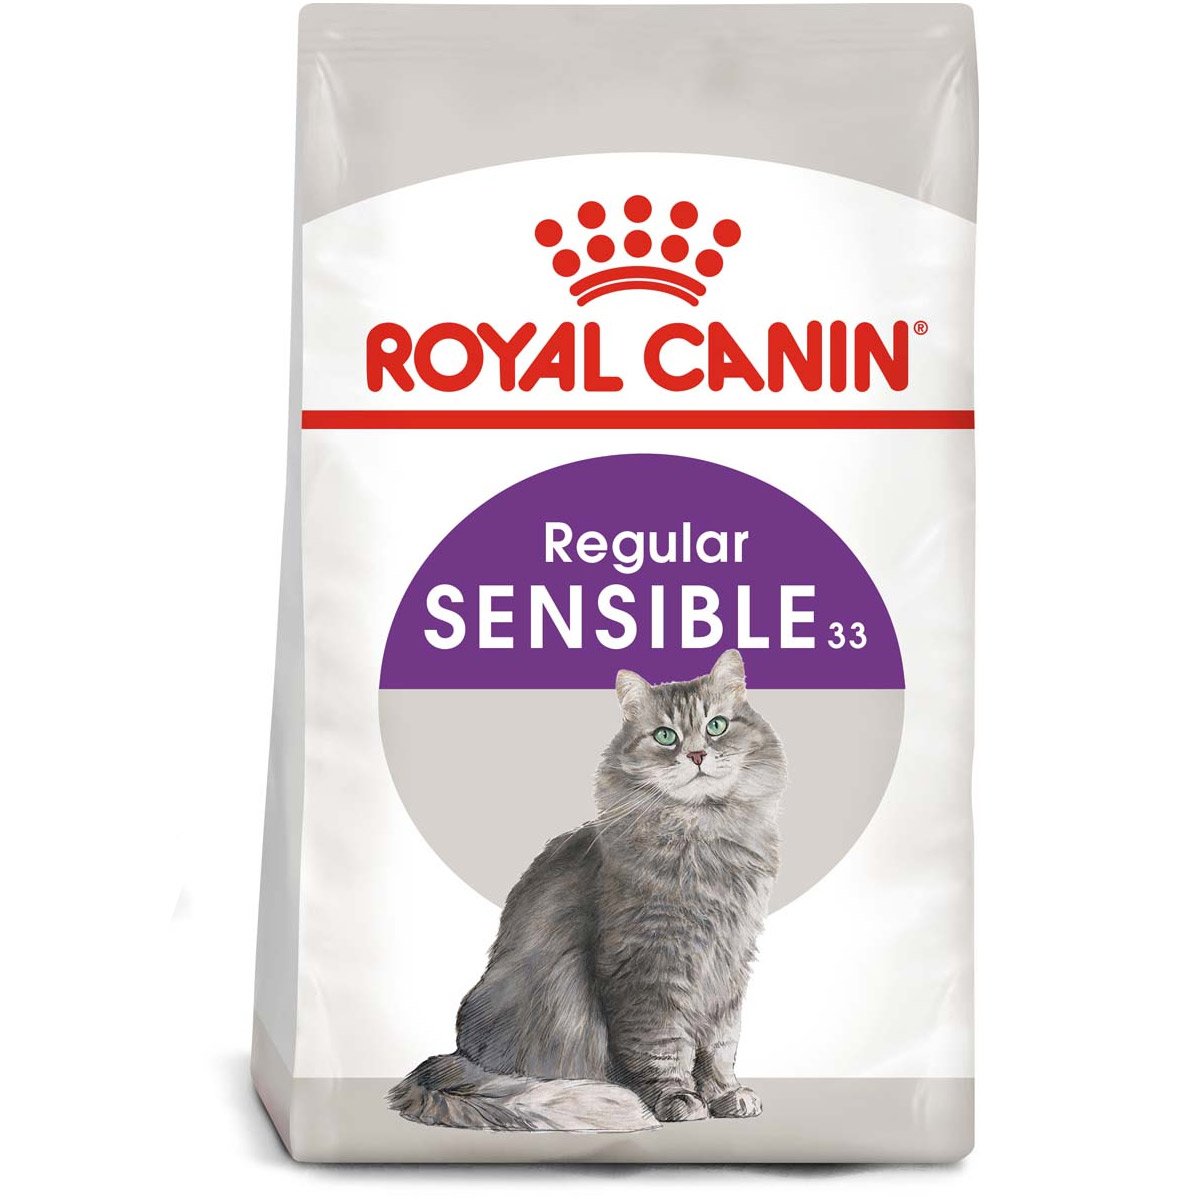 ROYAL CANIN SENSIBLE Trockenfutter für sensible Katzen 2kg von Royal Canin